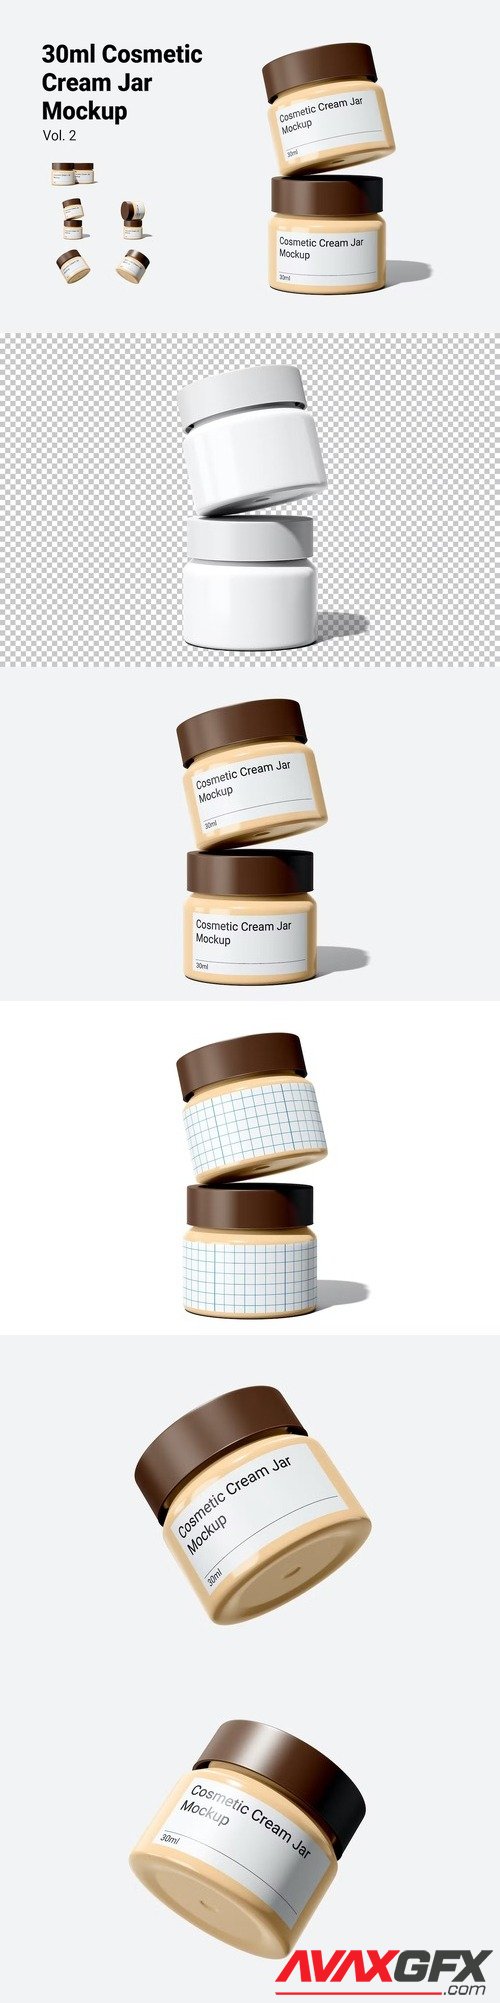 Cosmetic Cream Jar Mockup Vol.2 [PSD]